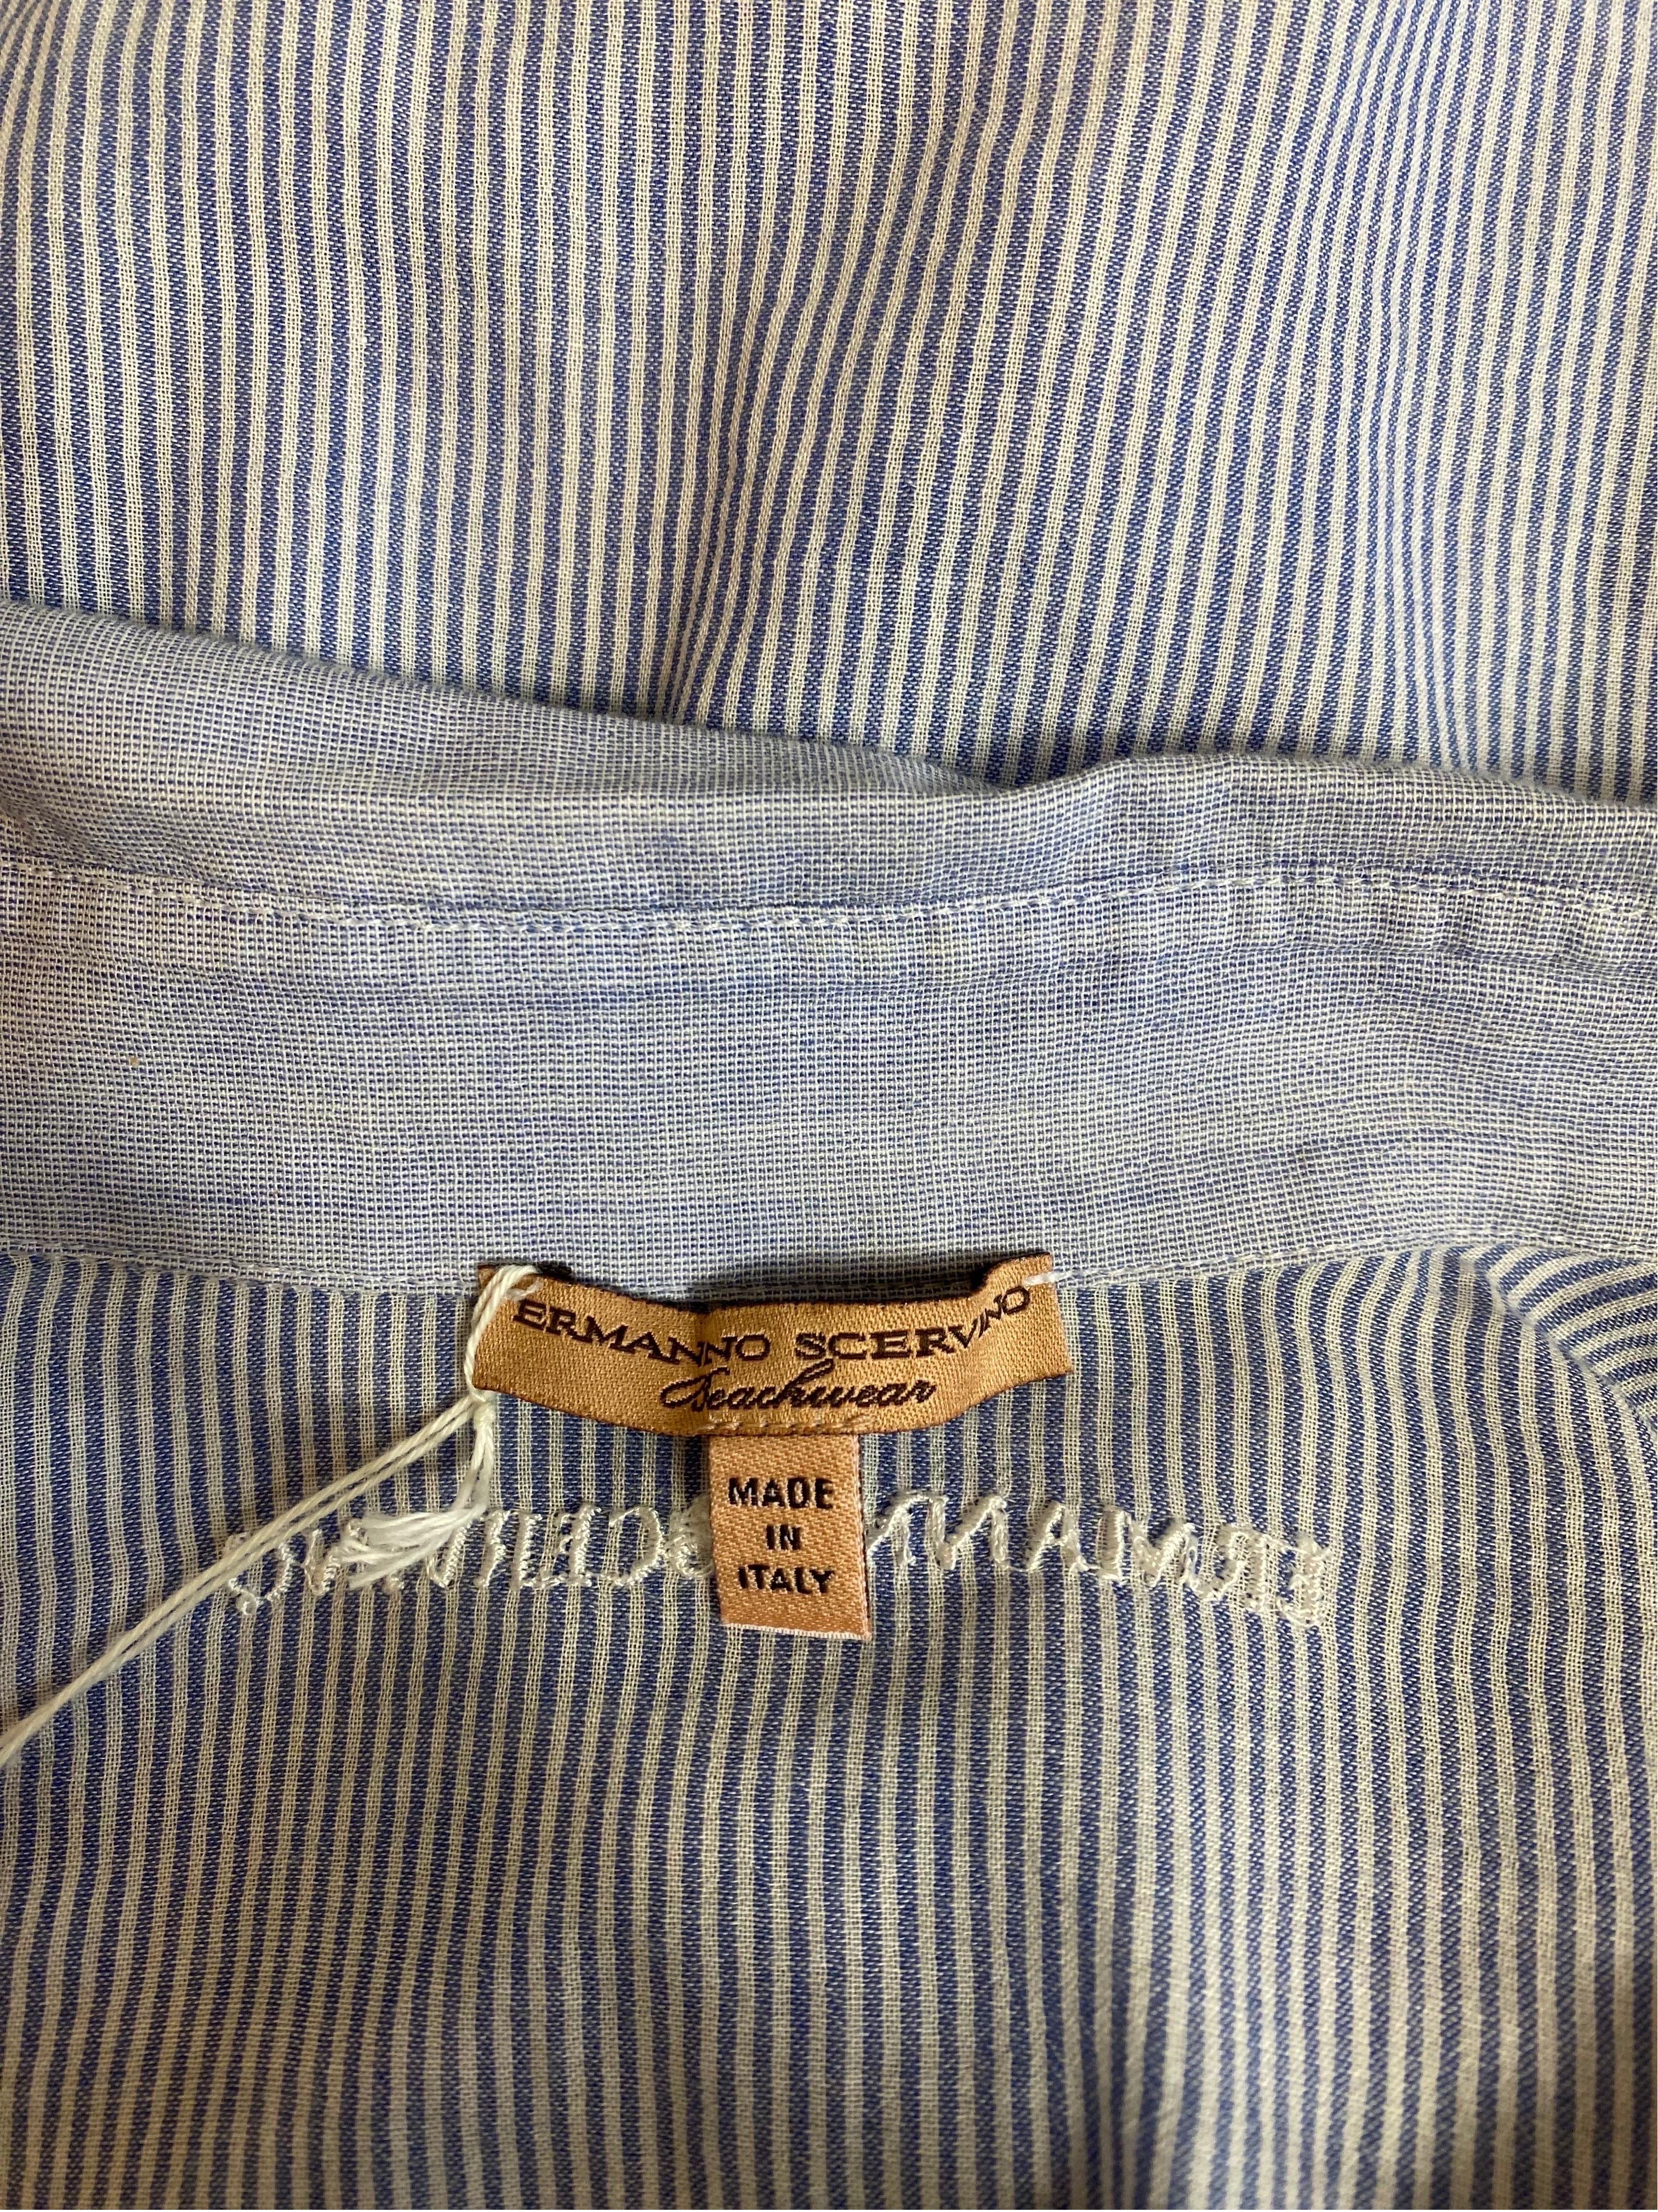 Ermanno Scervino light blue stripes Beachwear Shirt For Sale 3